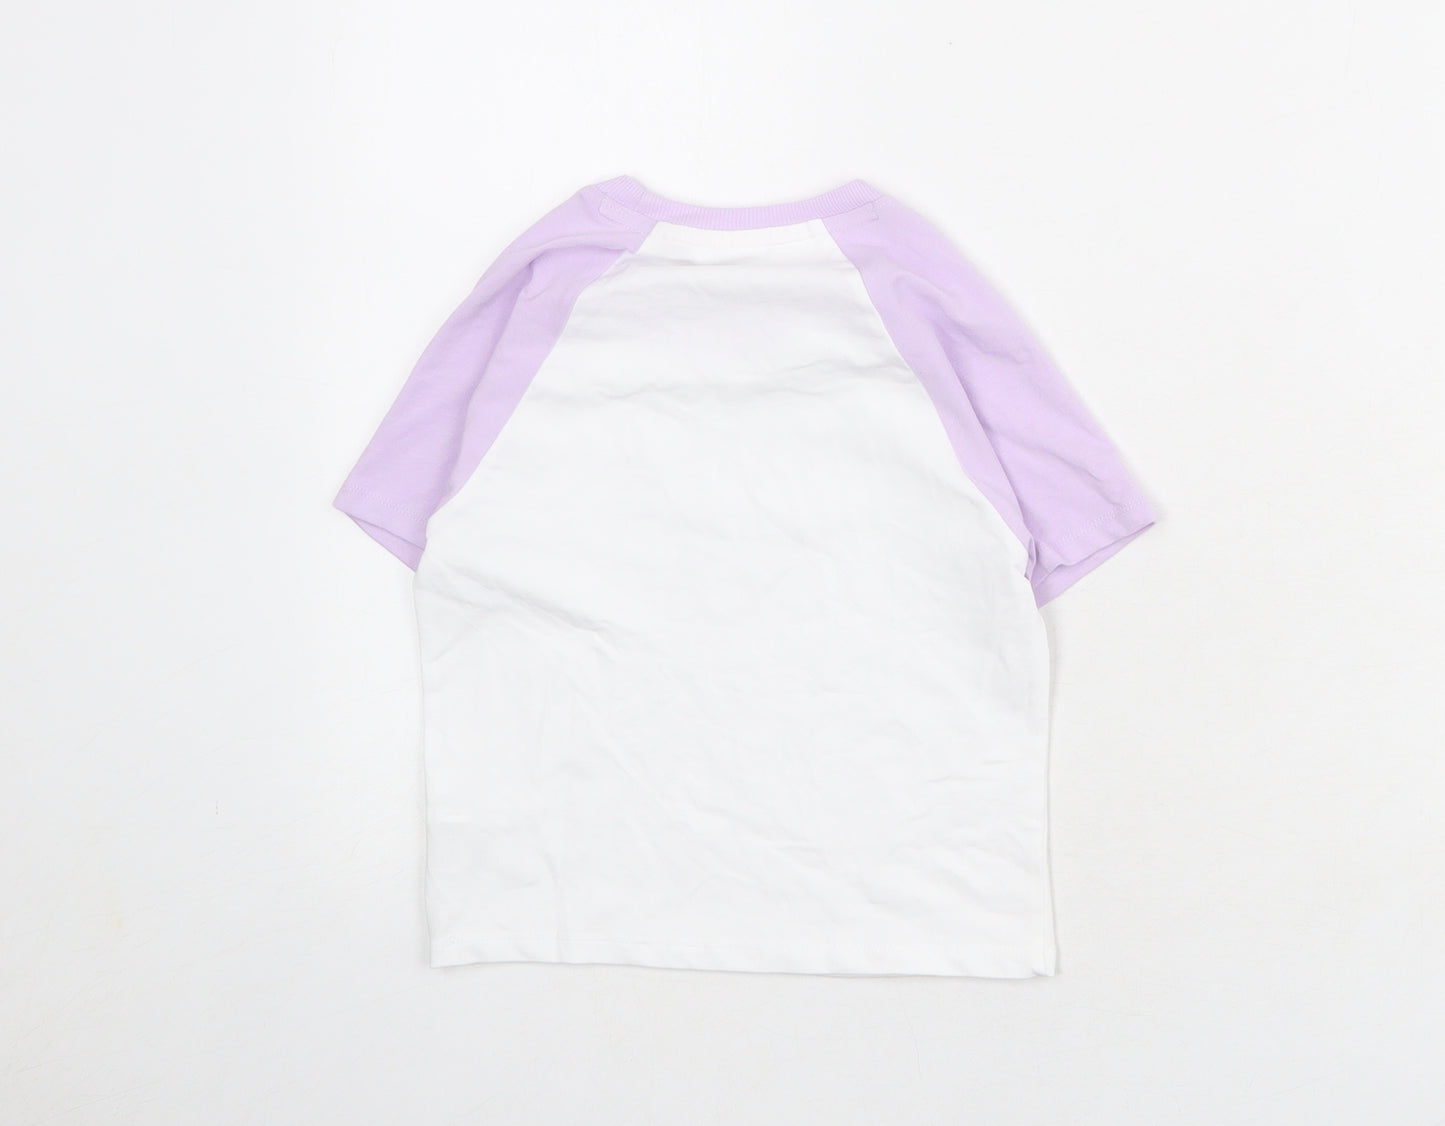 Disney Womens White Cotton Basic T-Shirt Size 2XS Round Neck - Stitch